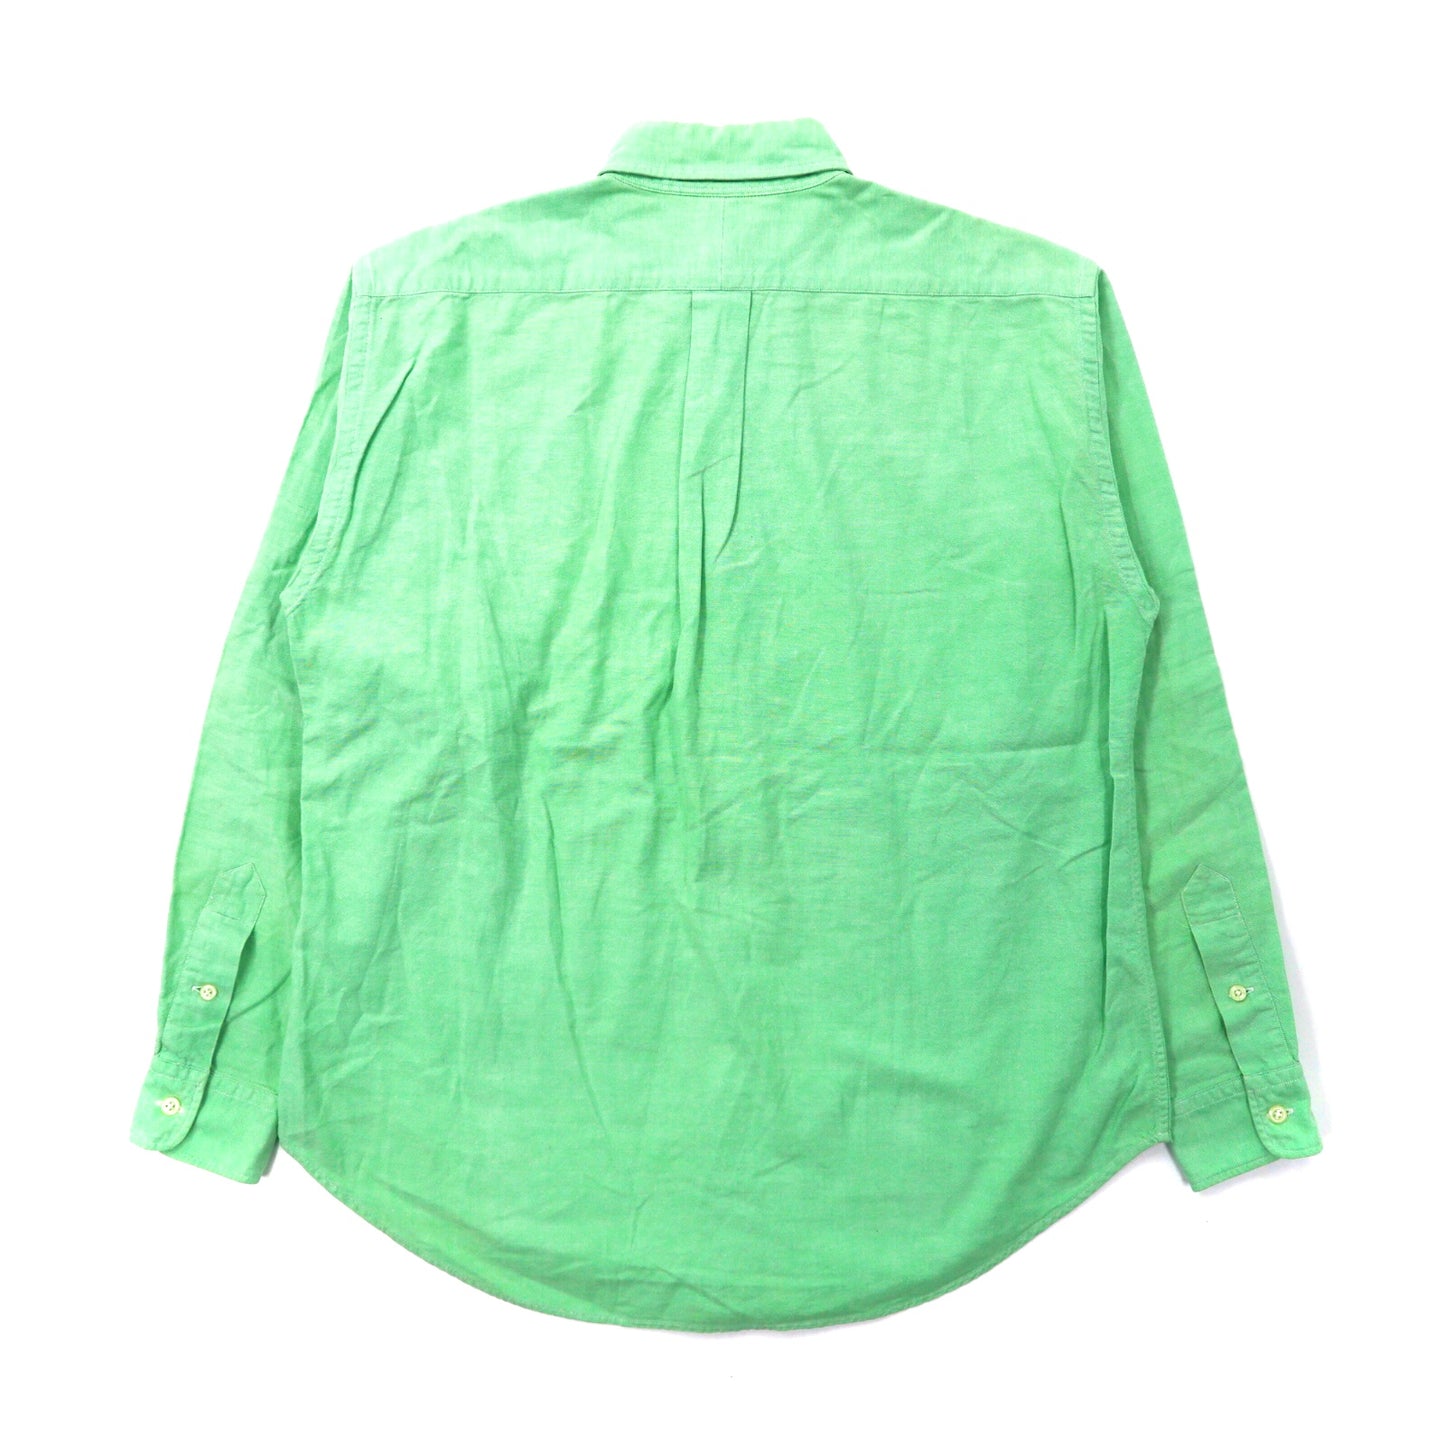 RALPH LAUREN ボタンダウンシャツ 8 グリーン コットン スモールポニー刺繍